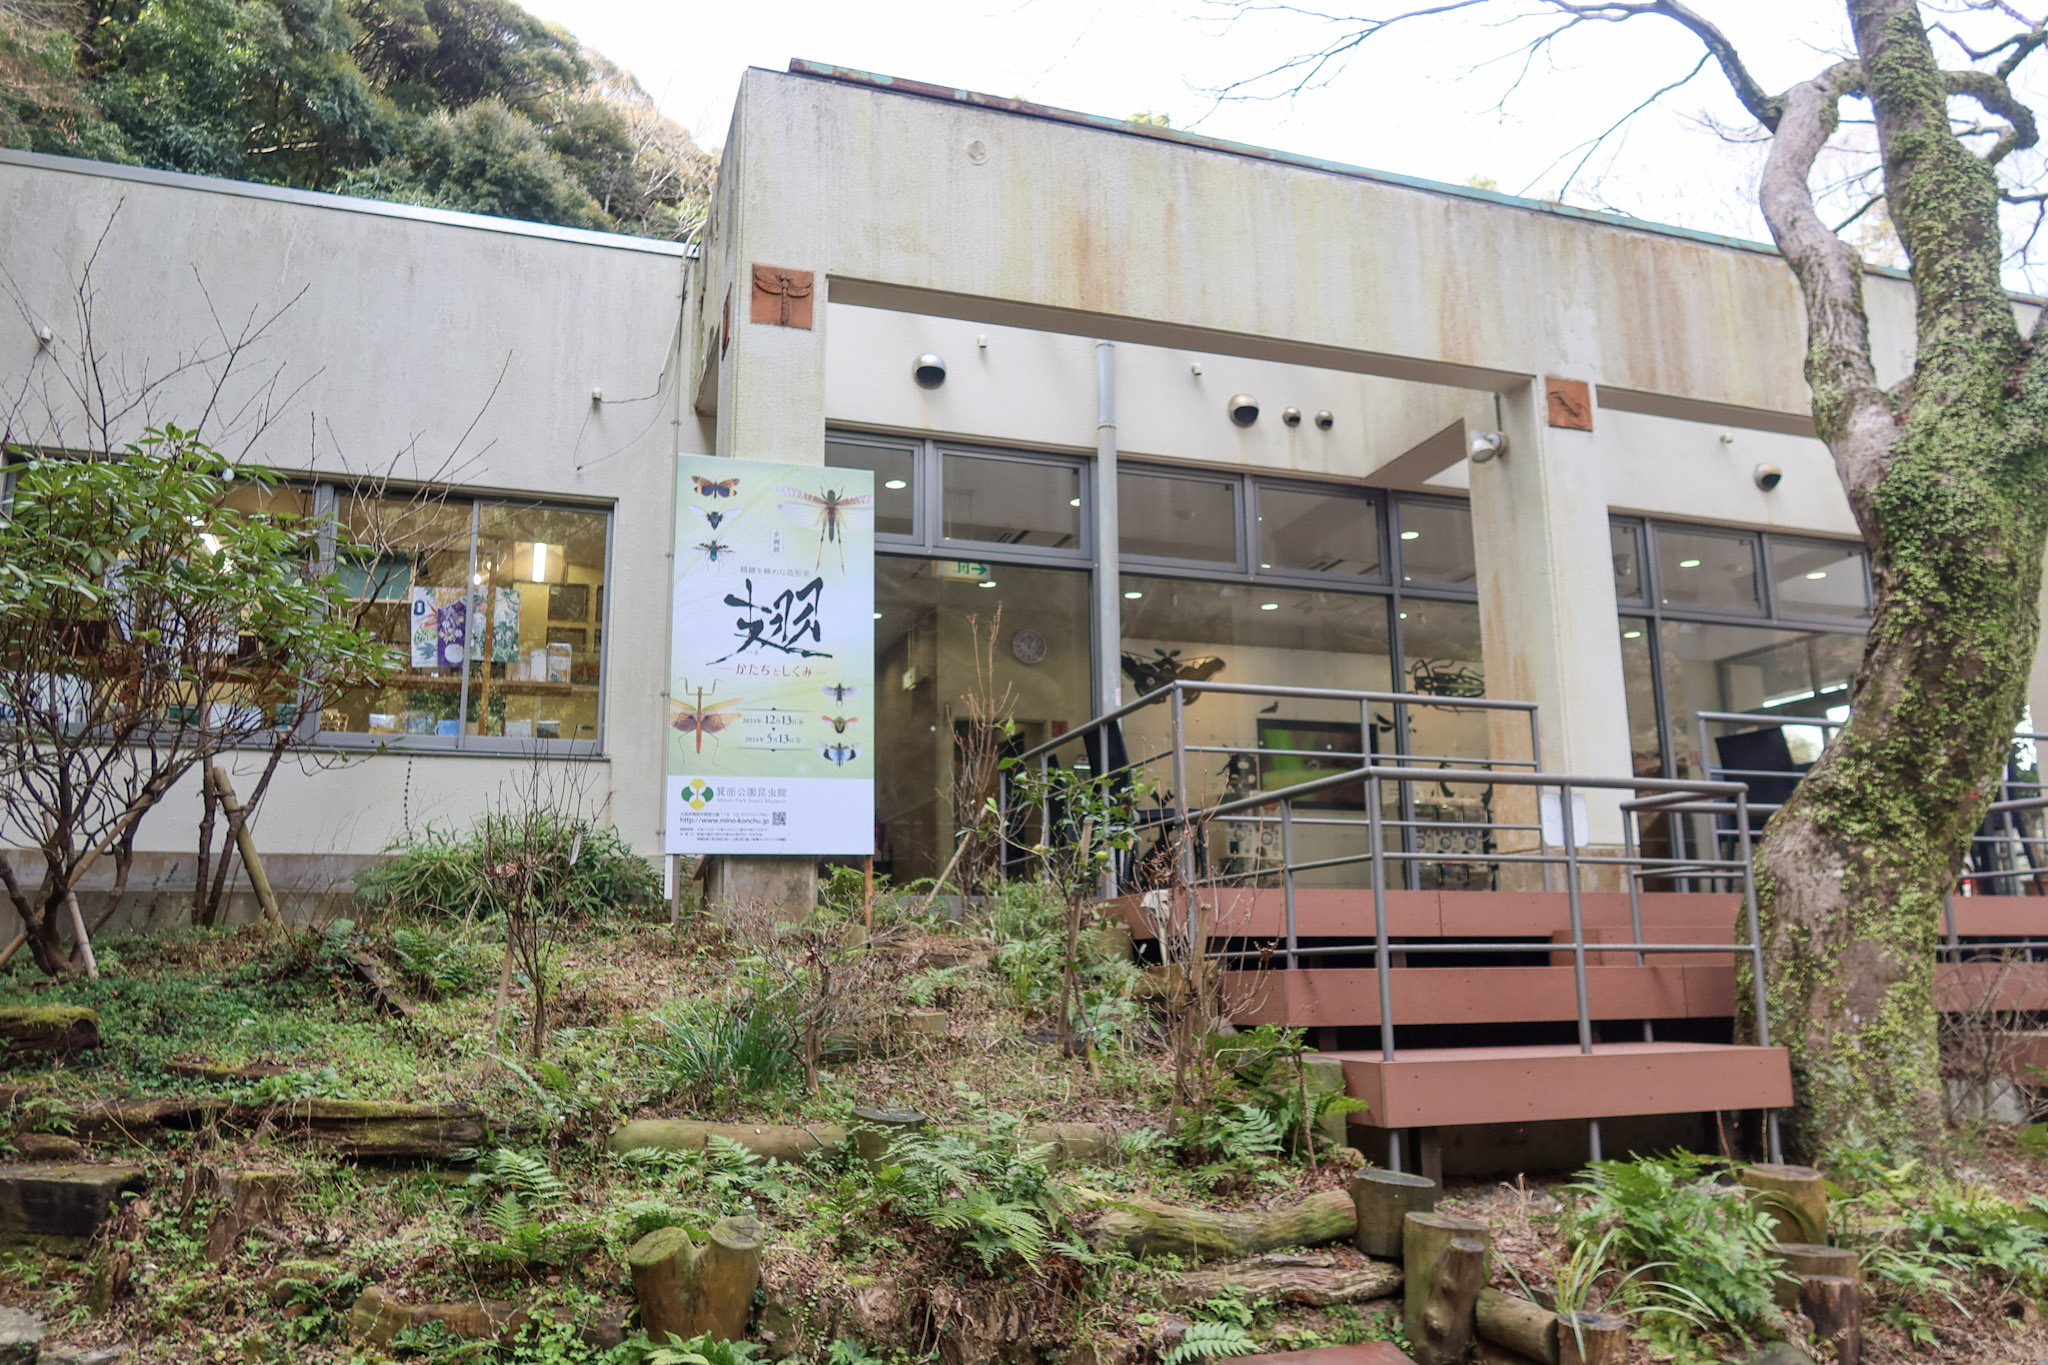 Minoh Park Insectarium - Osaka day trip